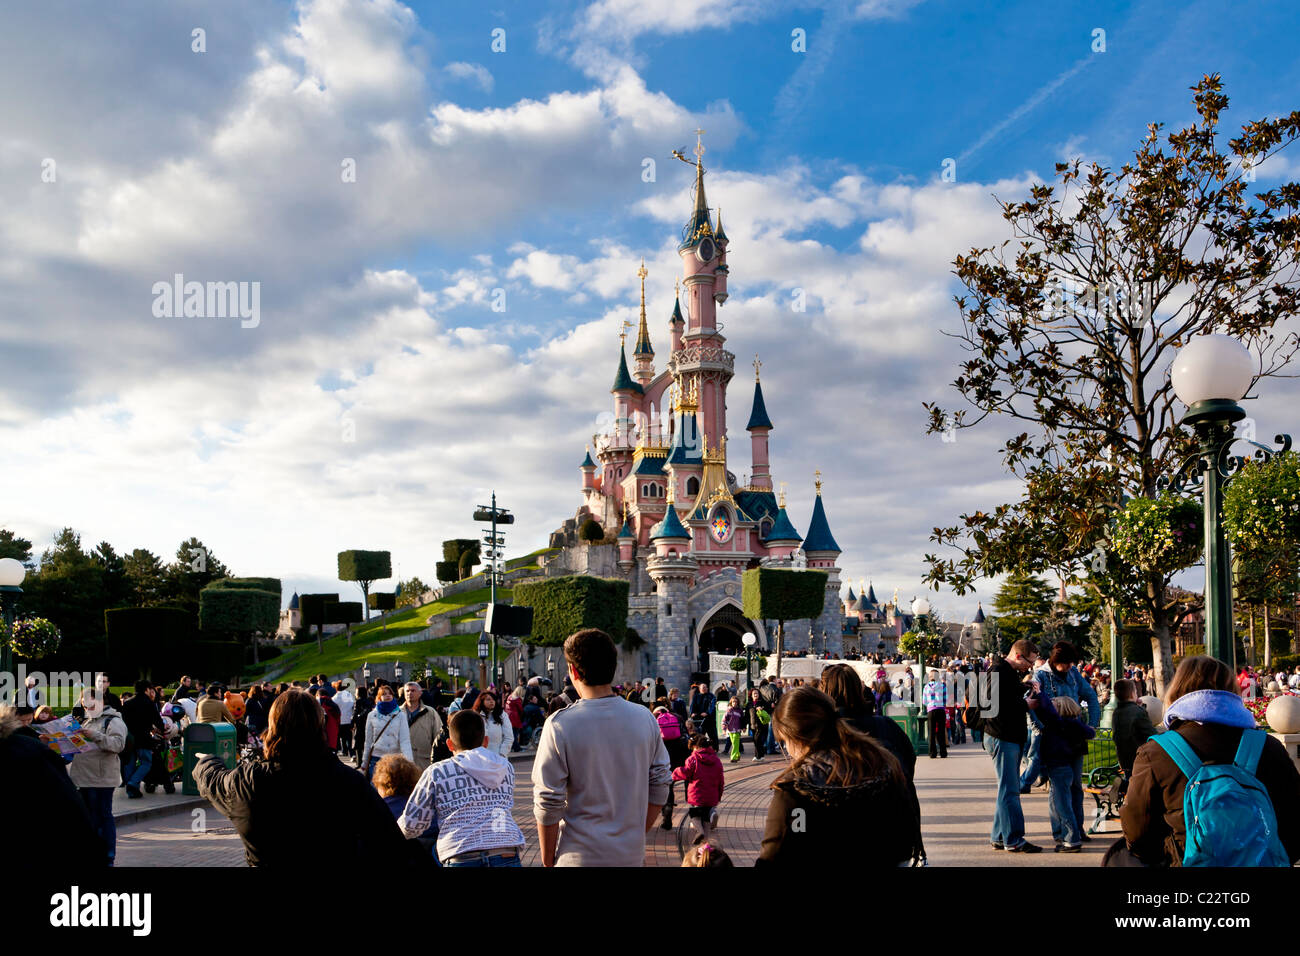 Cinderella's castle at Disneyland Paris, France Stock Photo